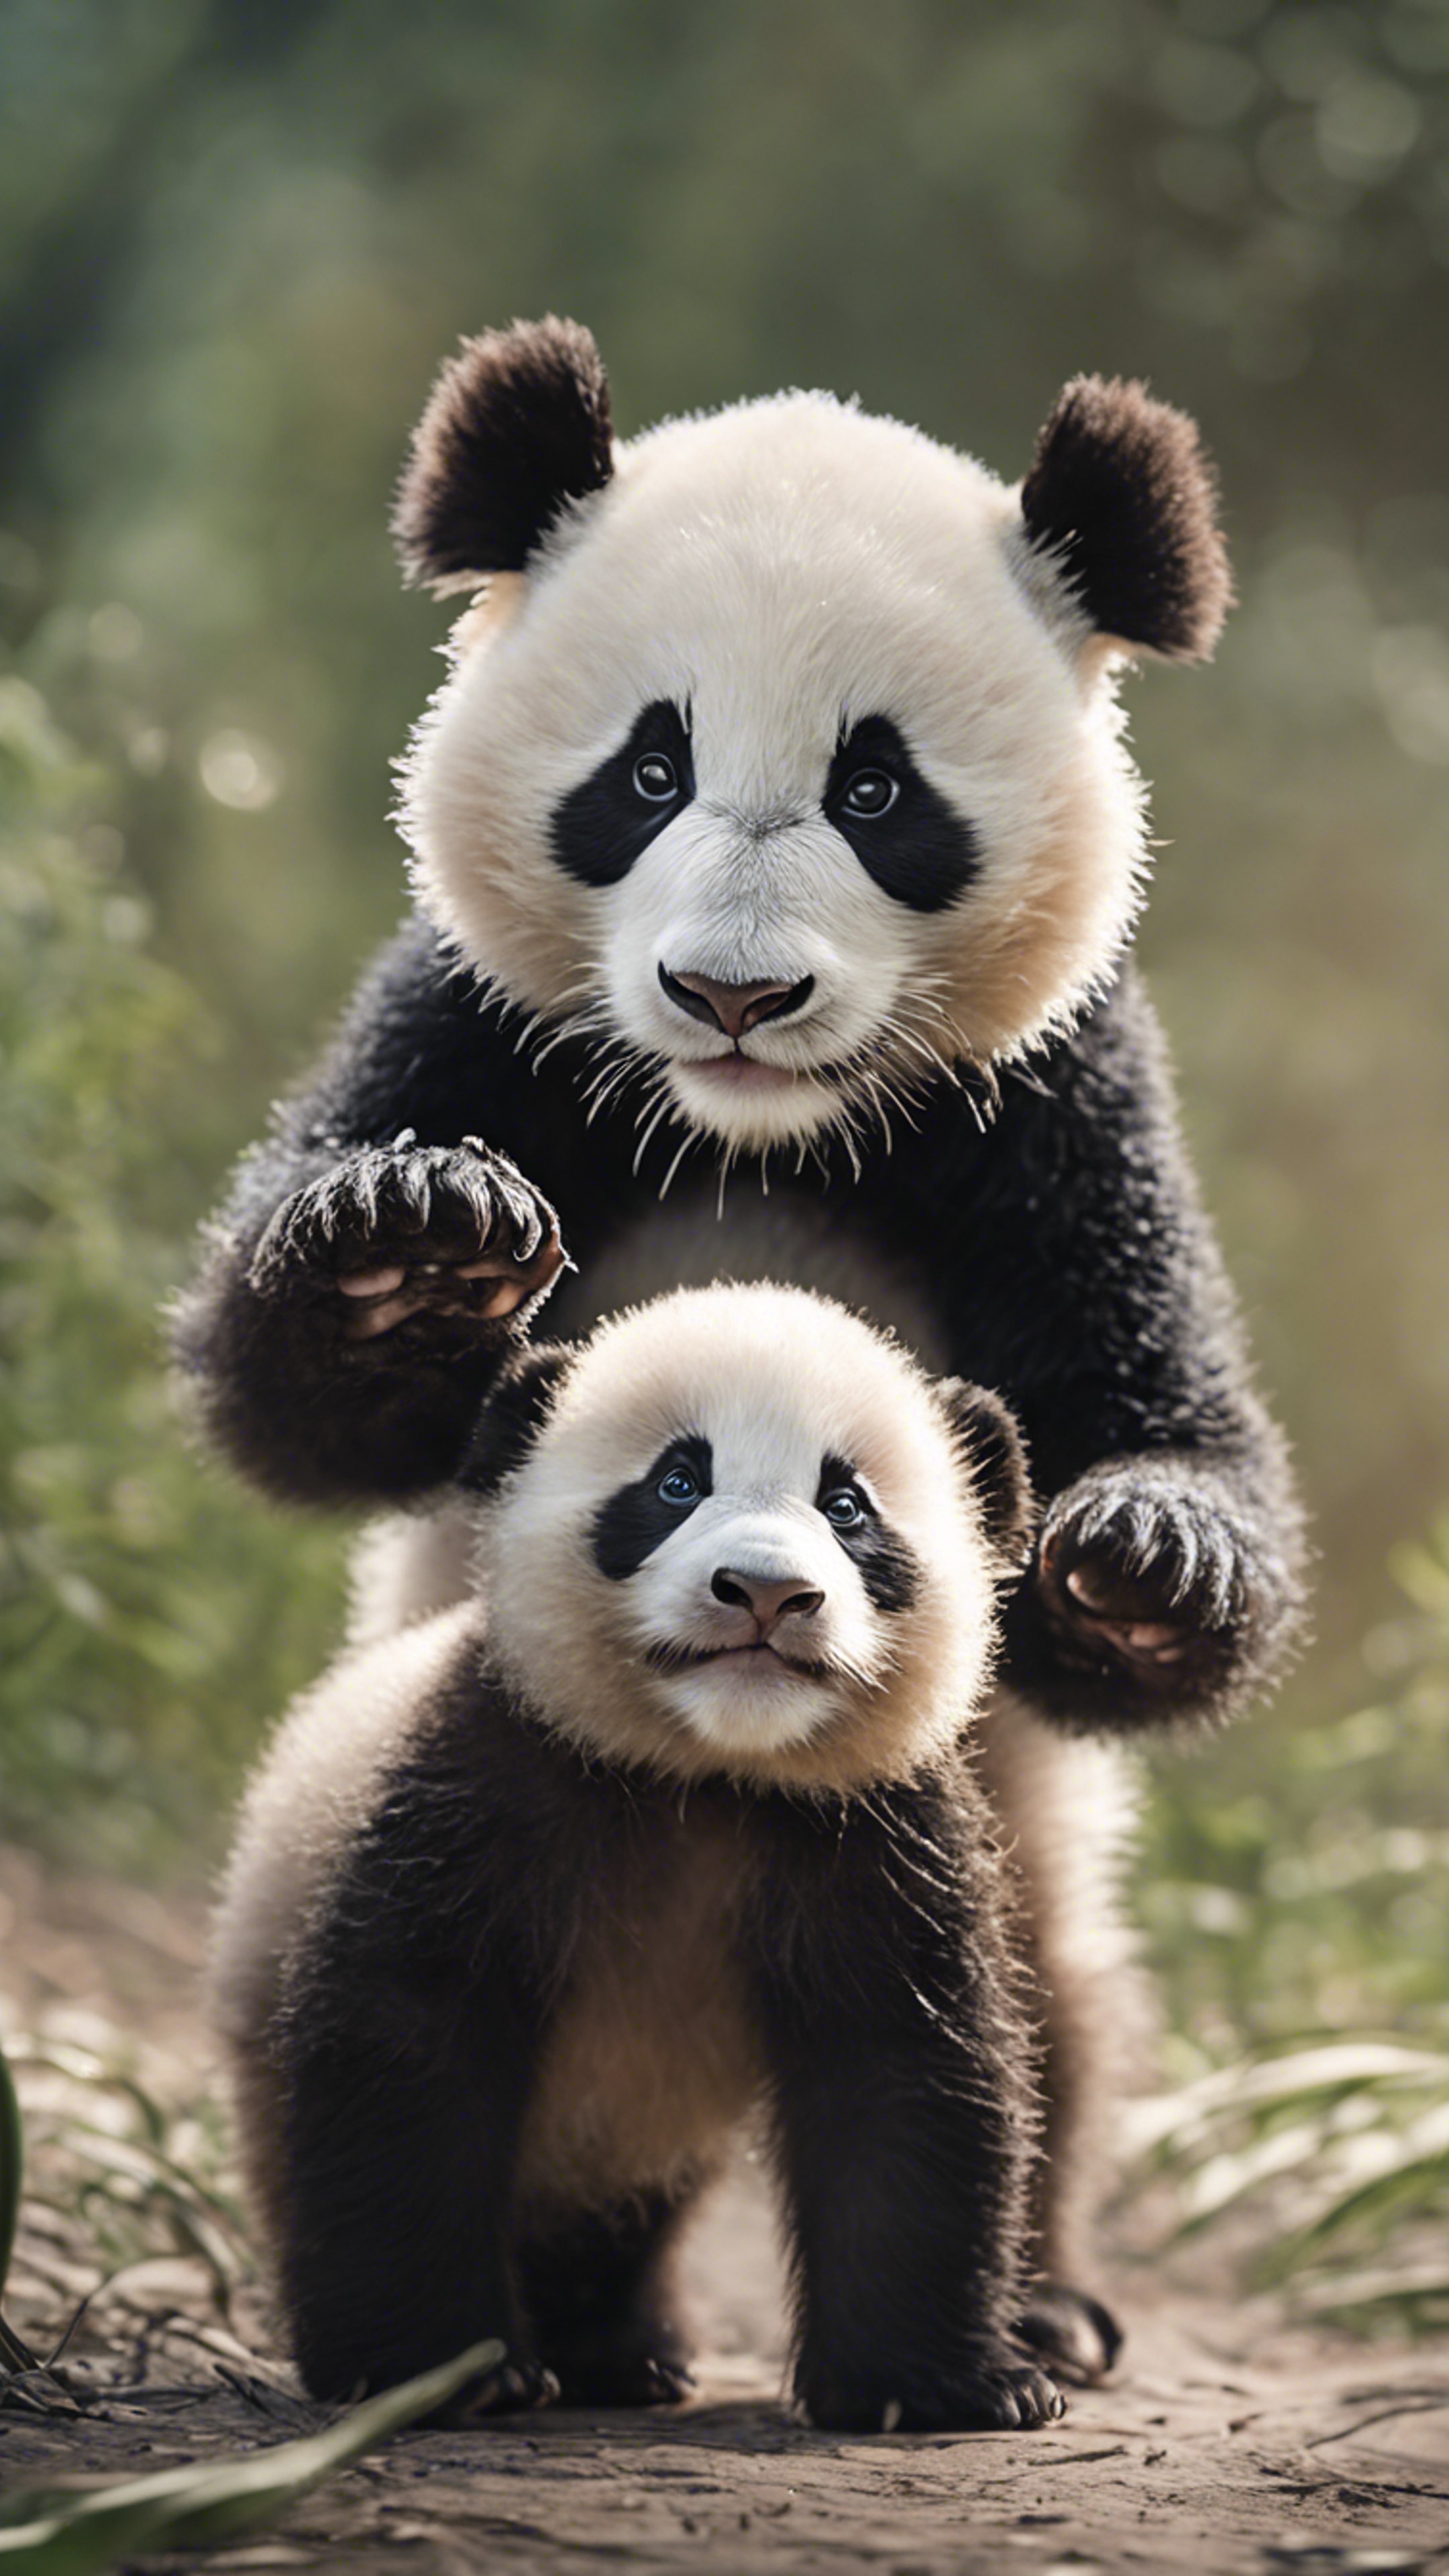 A newborn panda cub learning to walk, under the loving guidance of its mother. duvar kağıdı[d326db7fc4d14111aedf]